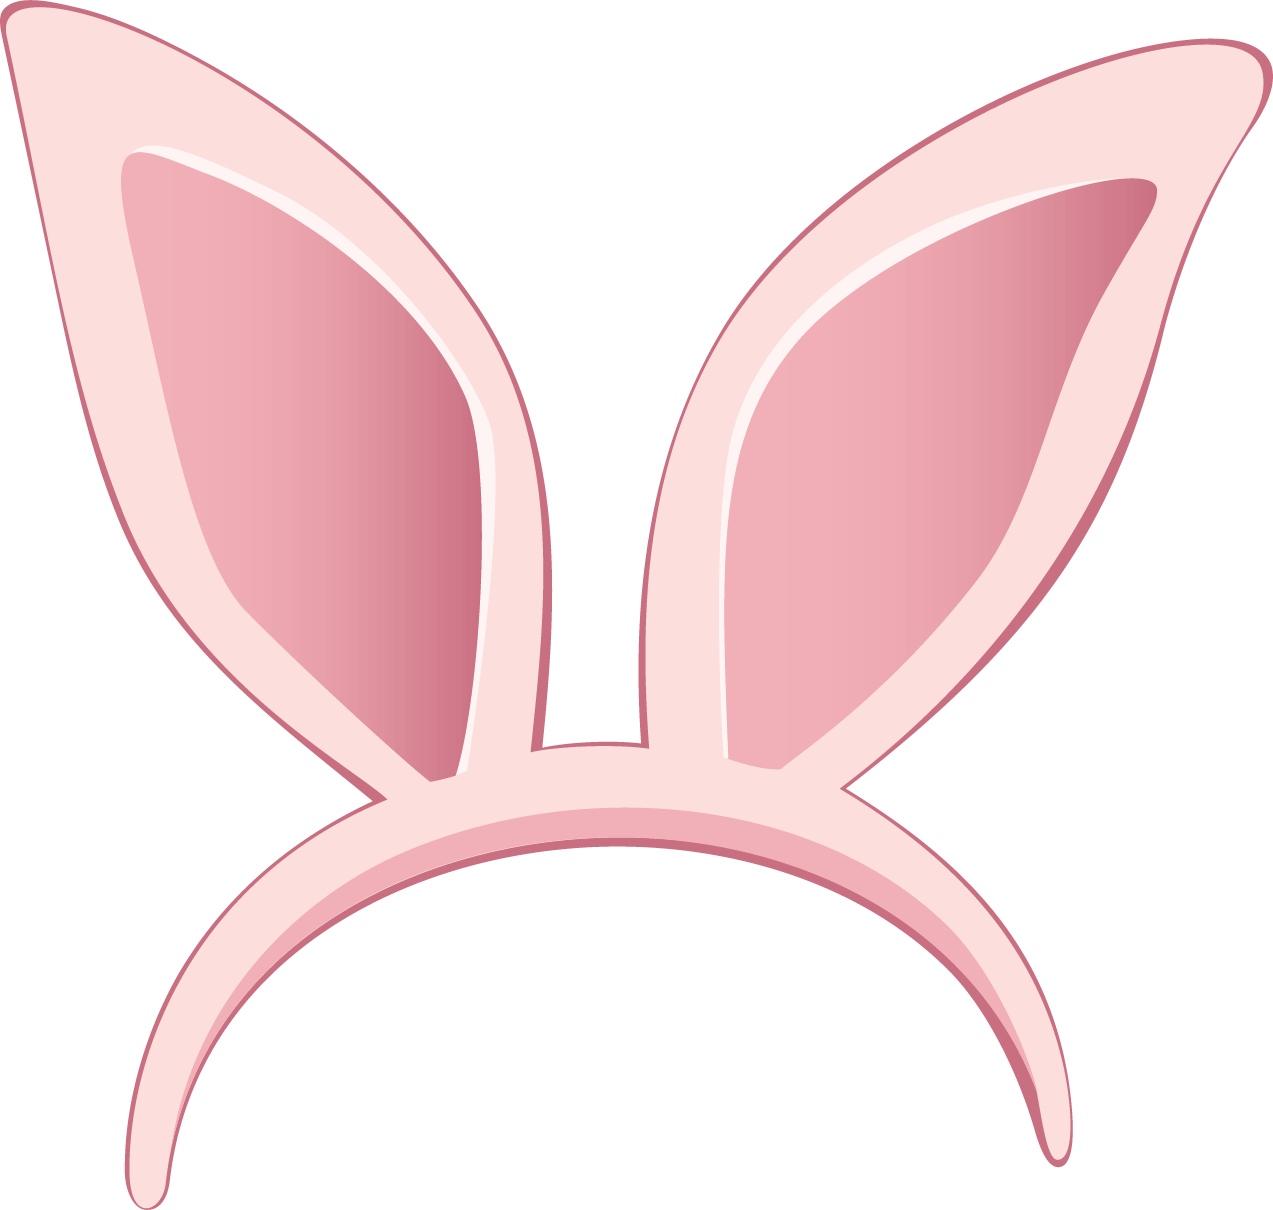 Bunny Ears Clip Art   Clipart Best